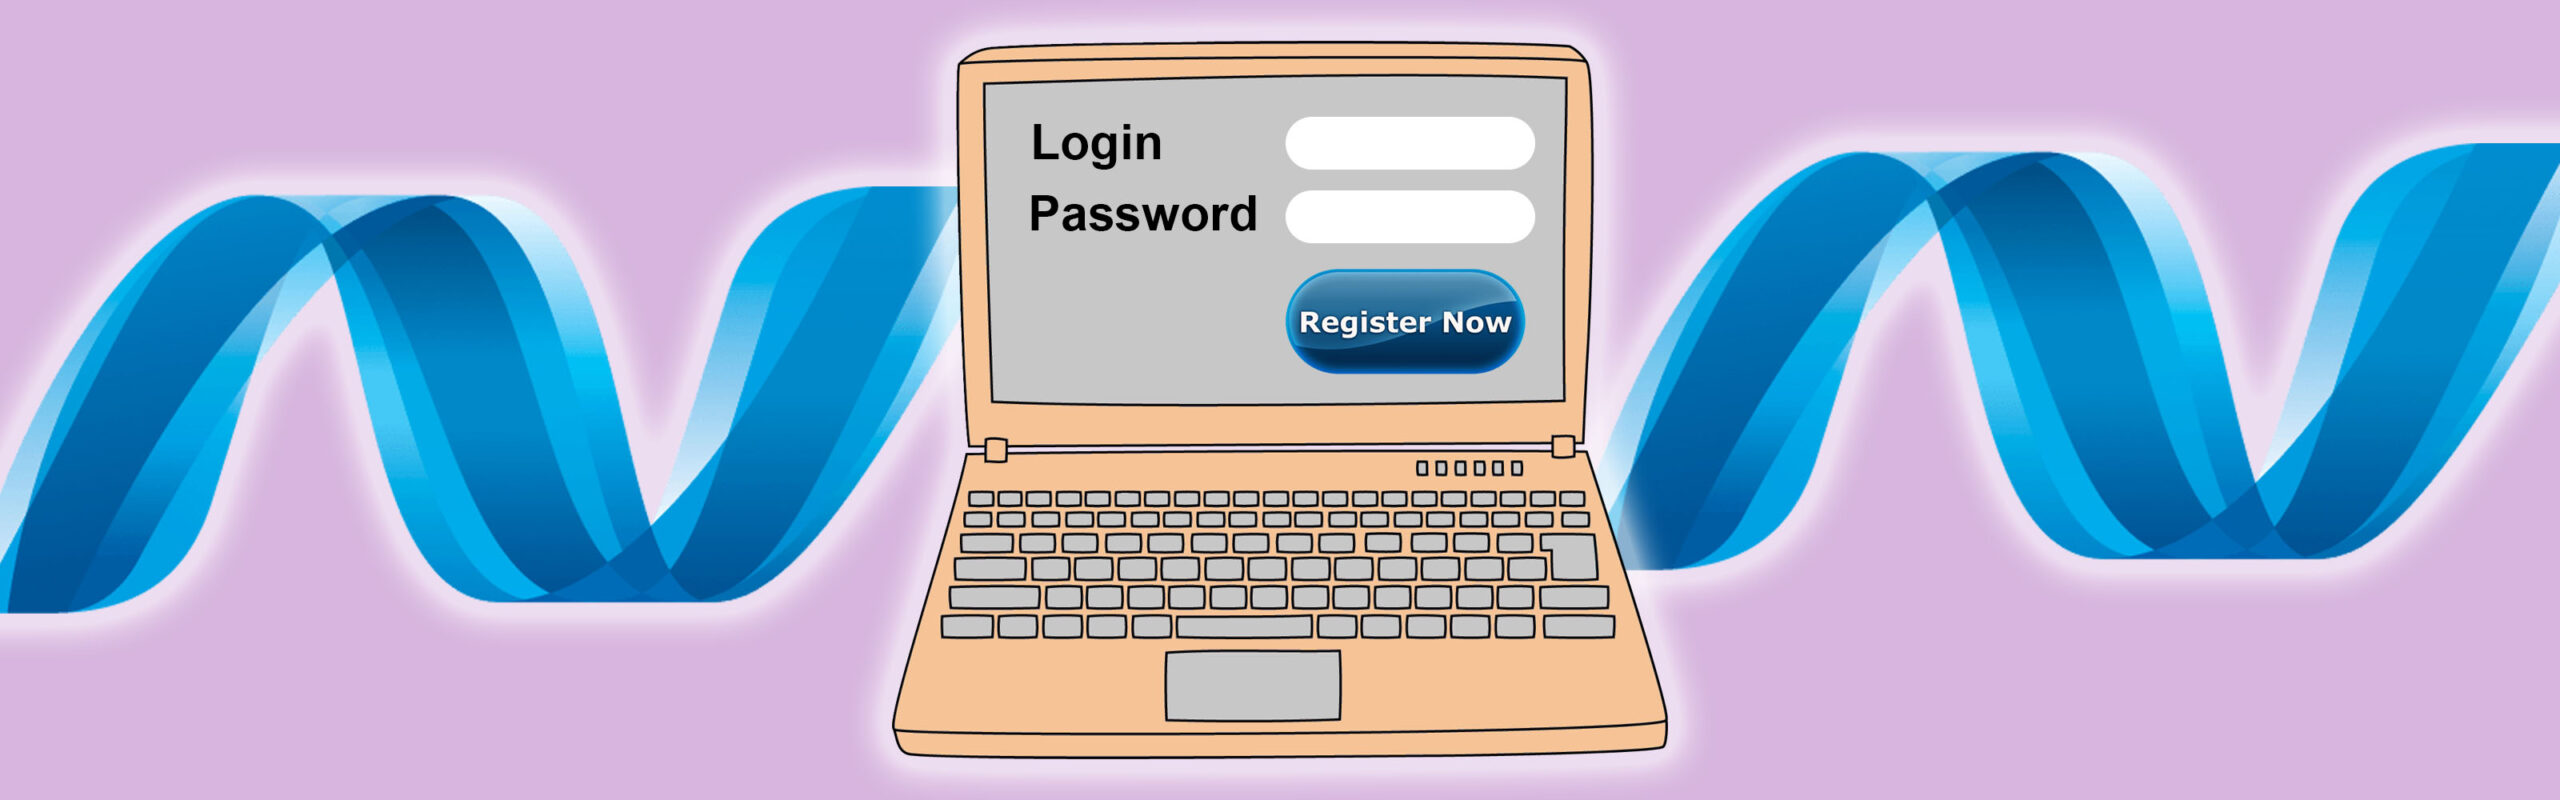 Registration Form with validation ASP NET